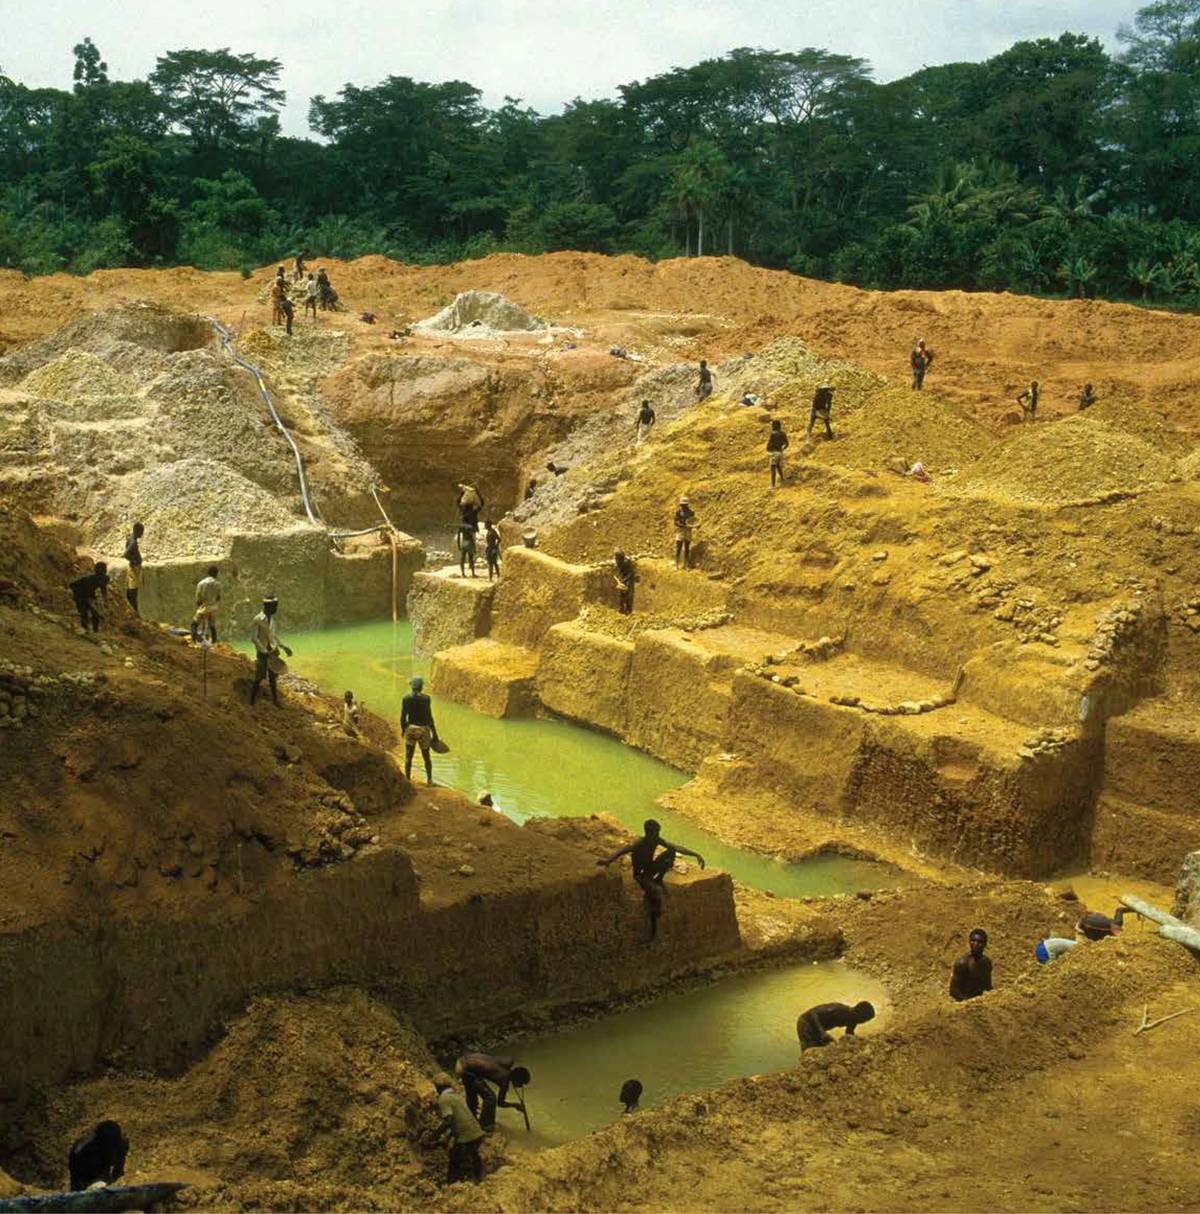 Sierra Leone produced 457,000 carats of gem diamond in 2014, feeding an $80 billion world market. Shown here is small-scale mining in the Kono region, 2005.